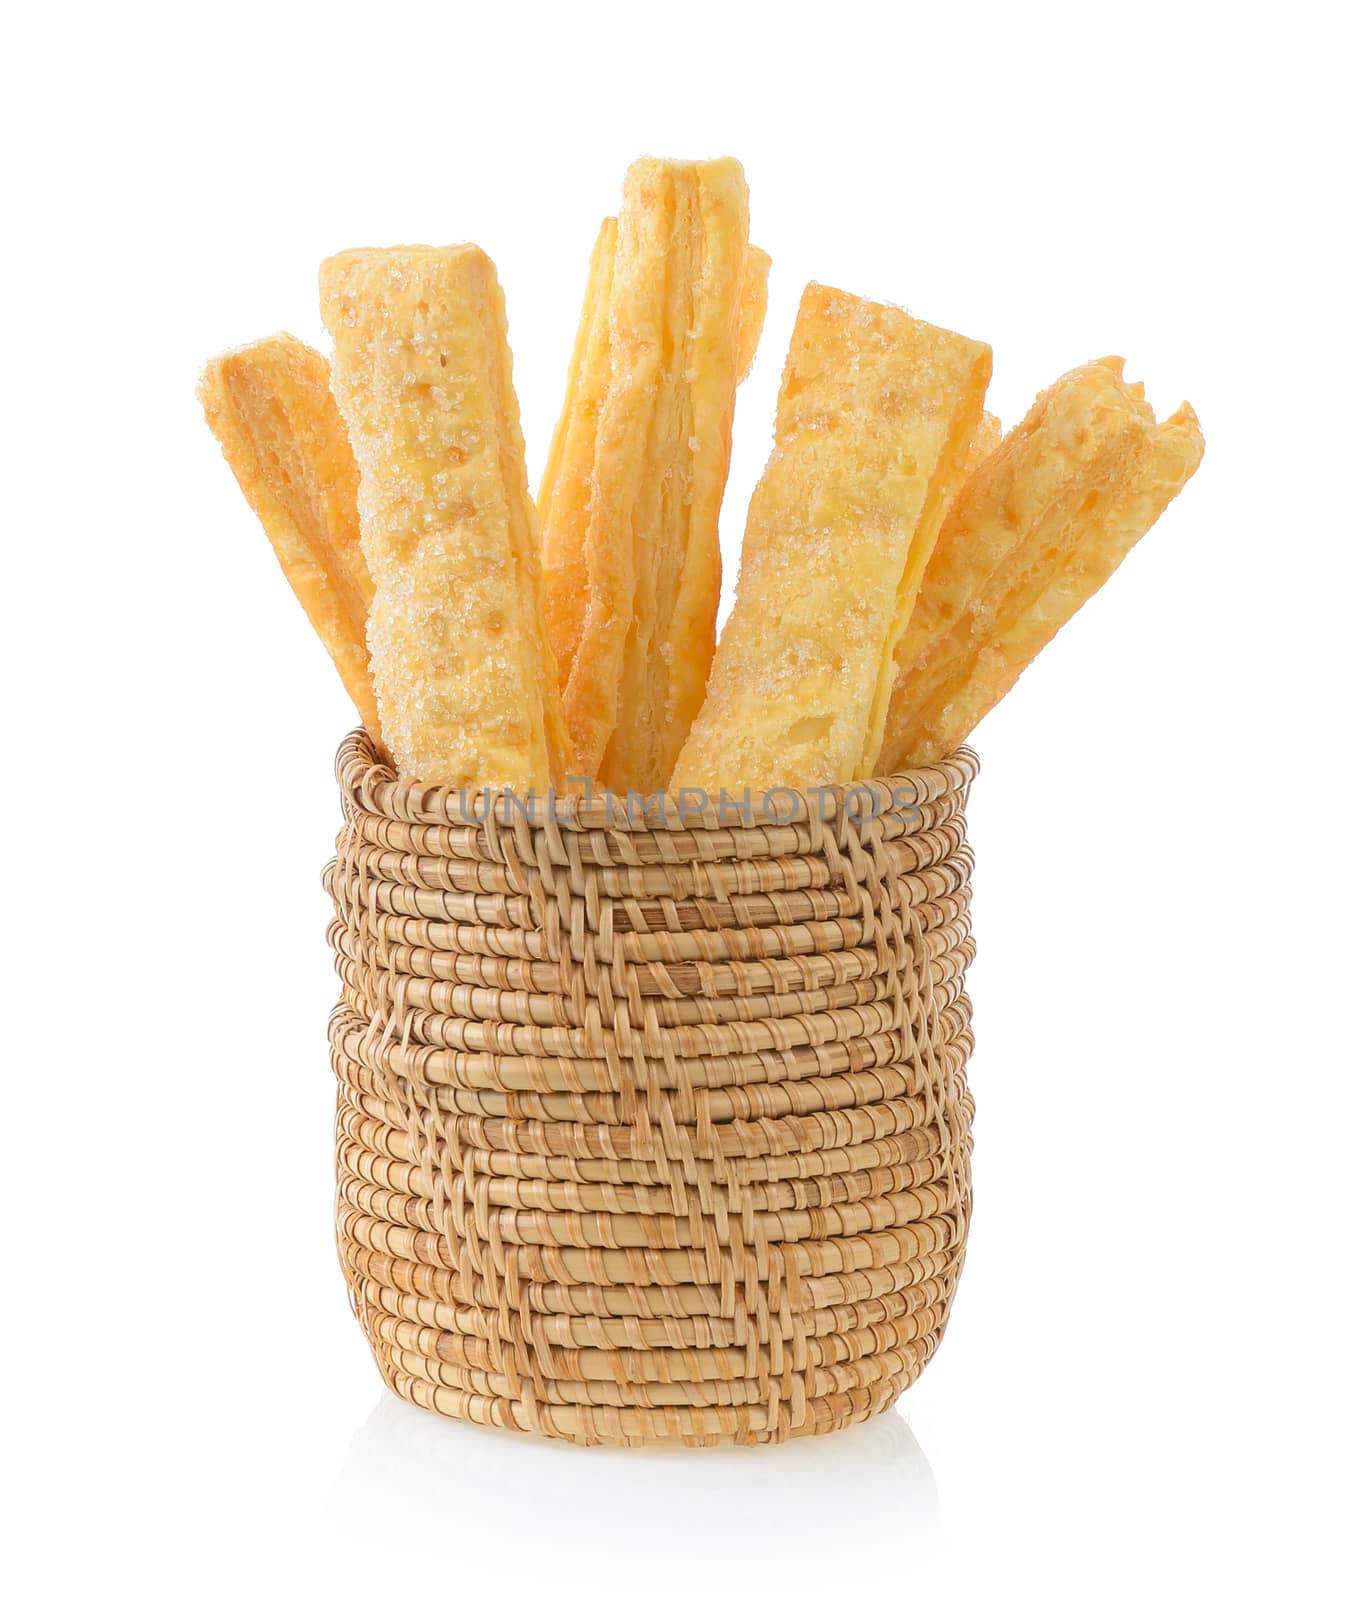 Pie or bread Sticks in basket